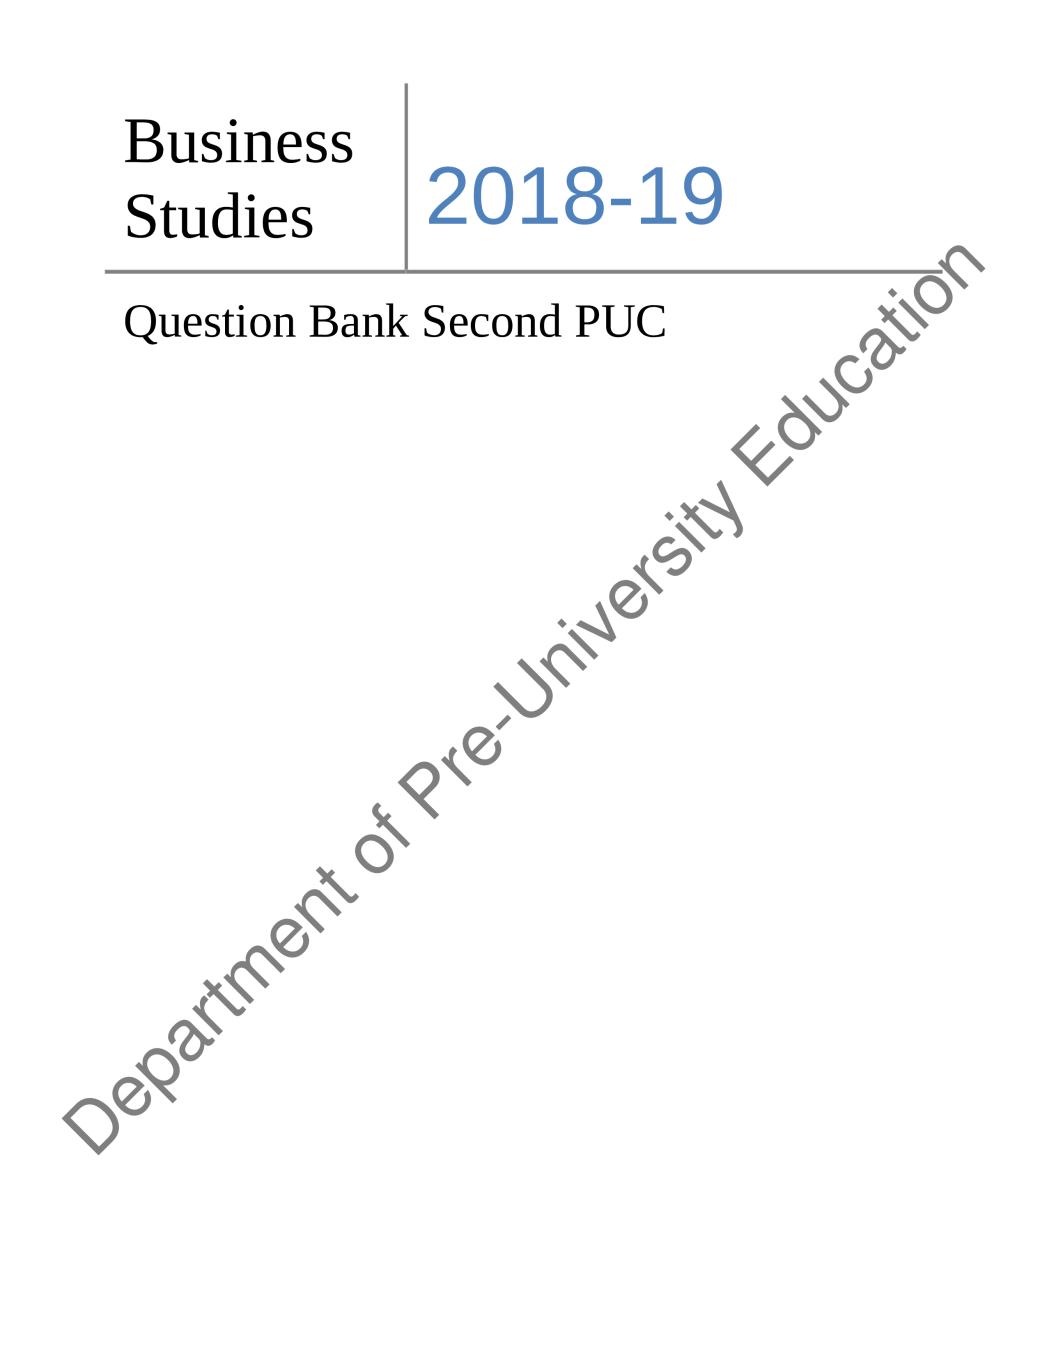 Karnataka 2nd PUC Question Bank for Business Studies 2018-19 - Page 1